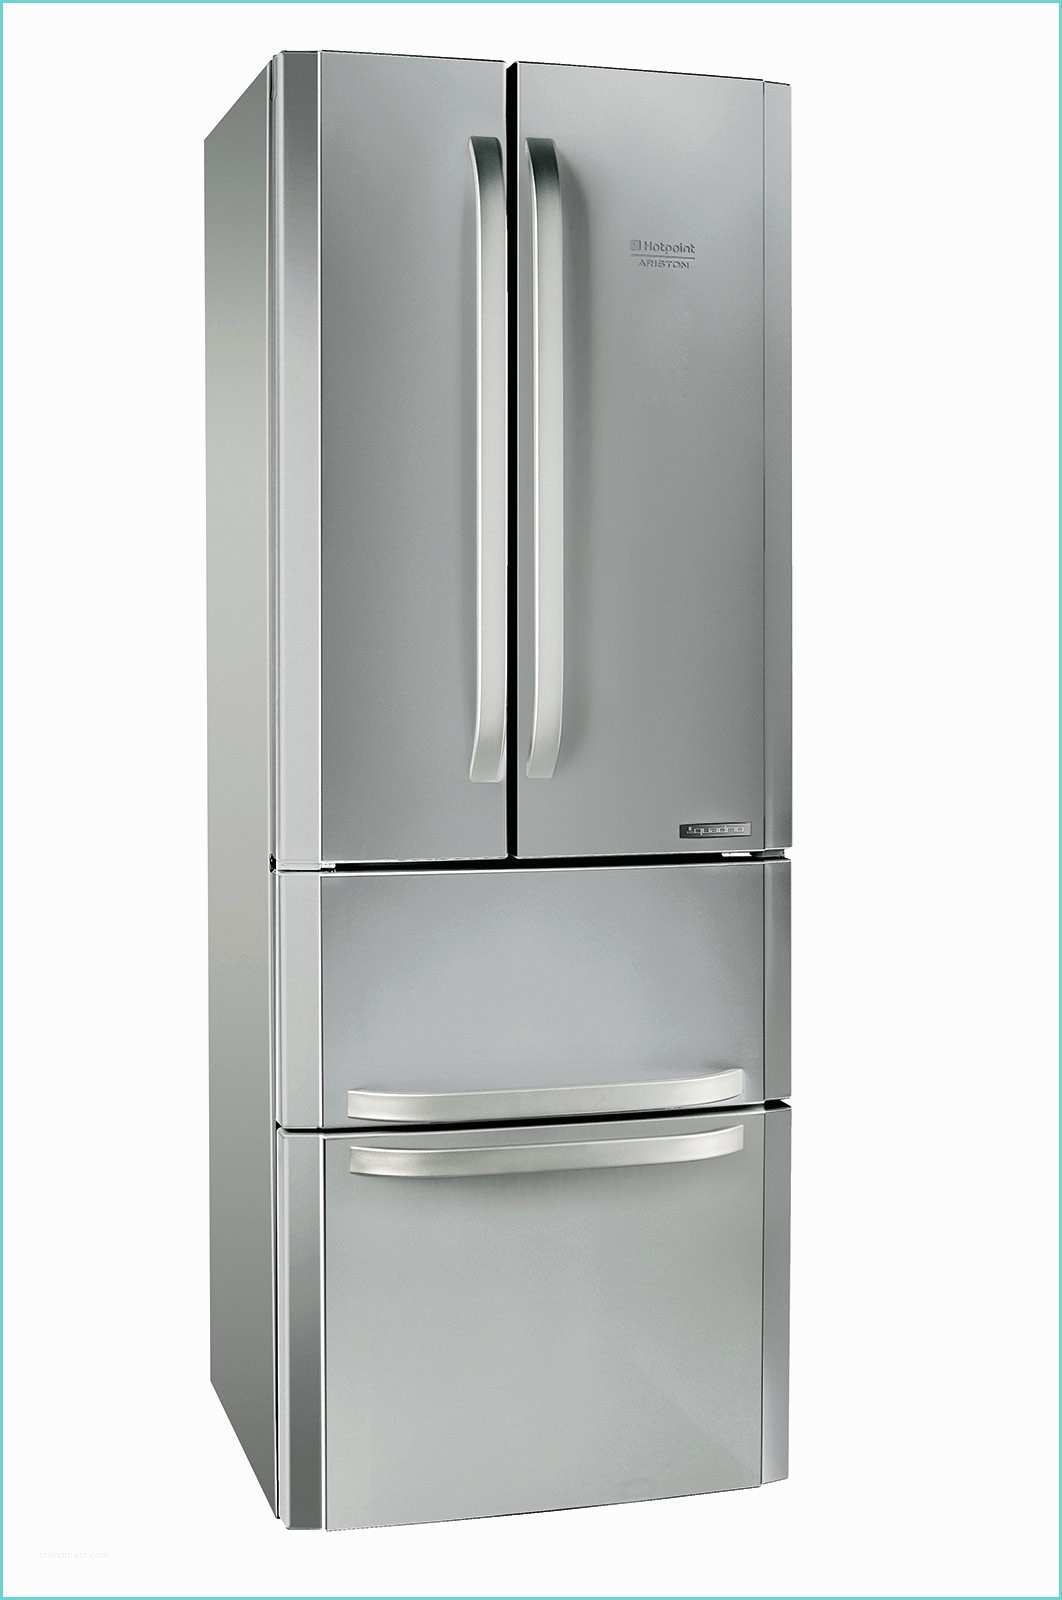 Refrigerateur Grande Largeur 90 Cm Refrigerateur Grande Ur 90 Cm Frigo E Congelatore